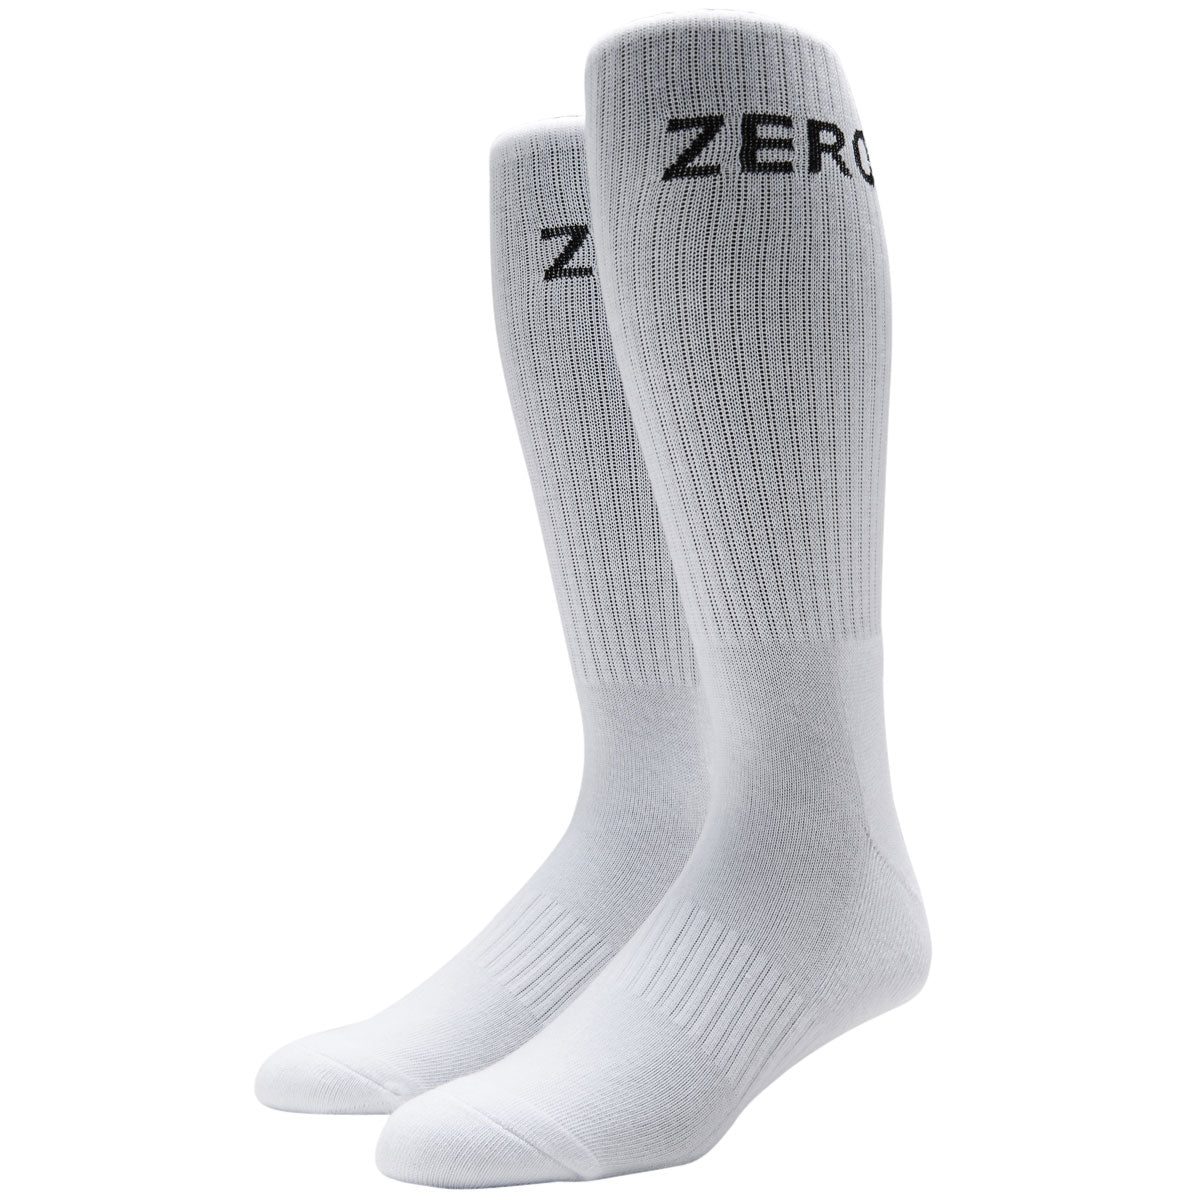 Zero Army Socks - White image 1